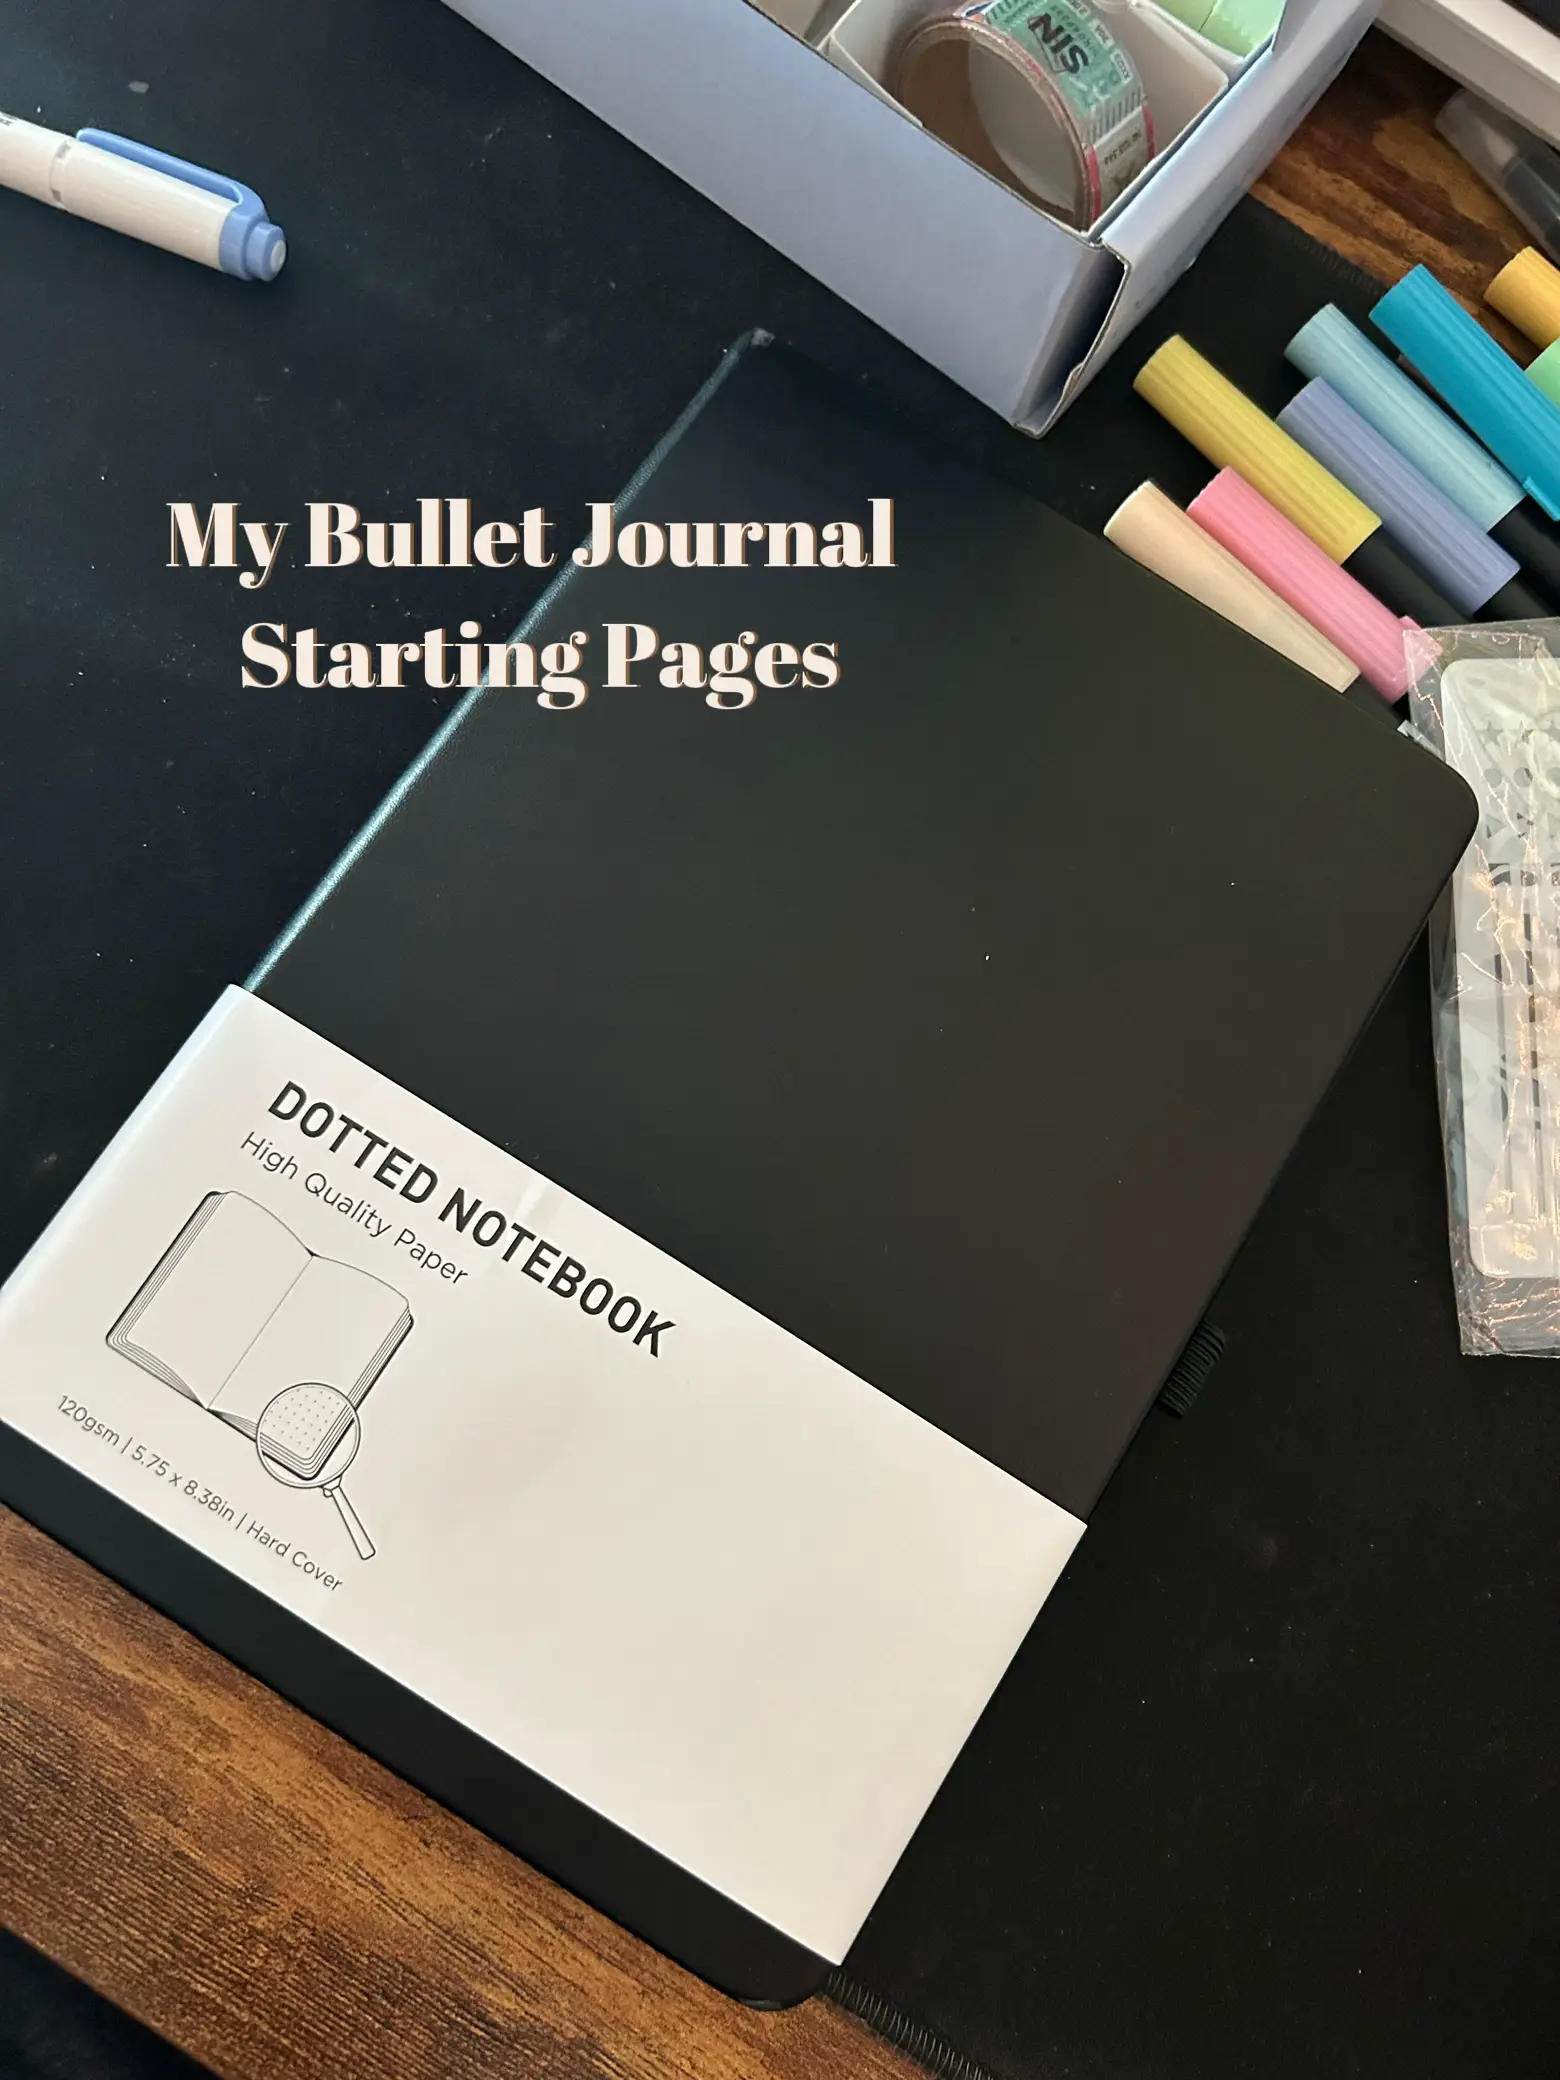 Crayola Supertips organization : r/bulletjournal